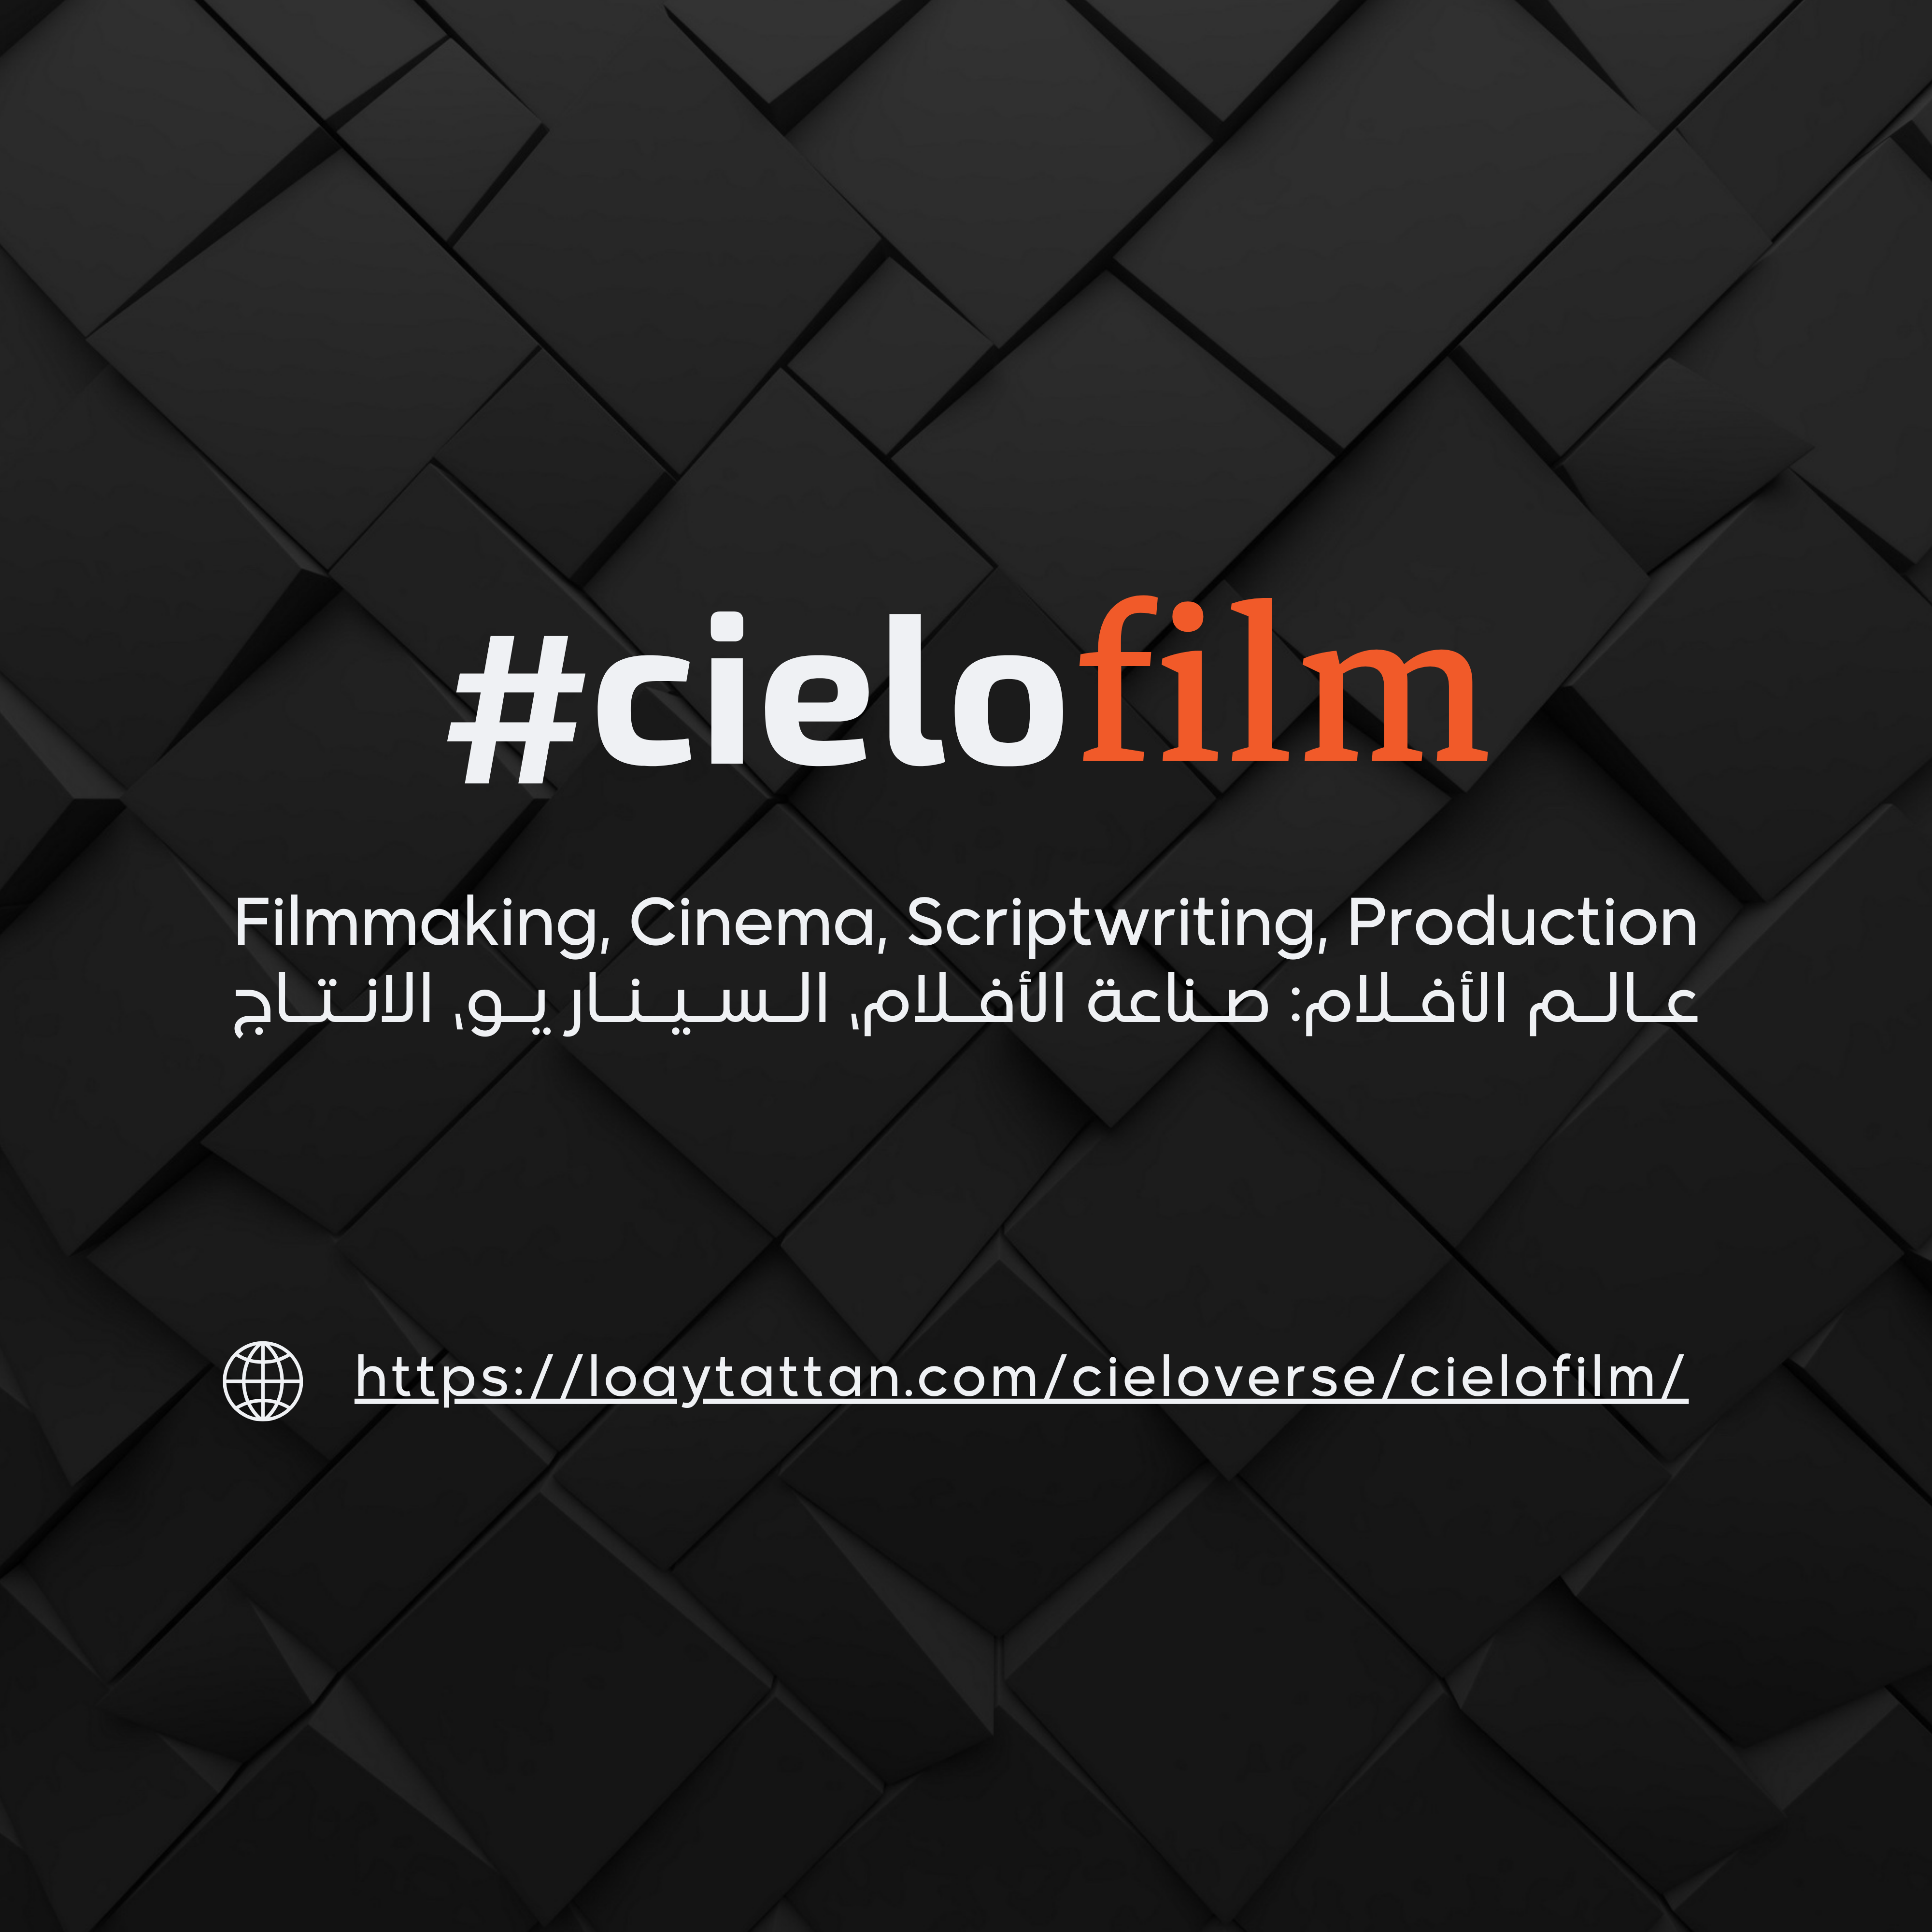 cielo film by cieloverse. Logo and Hashtag: Filmmaking, Cinema, Scriptwriting, Production عالم الأفلام: صناعة الأفلام، السيناريو، الانتاج